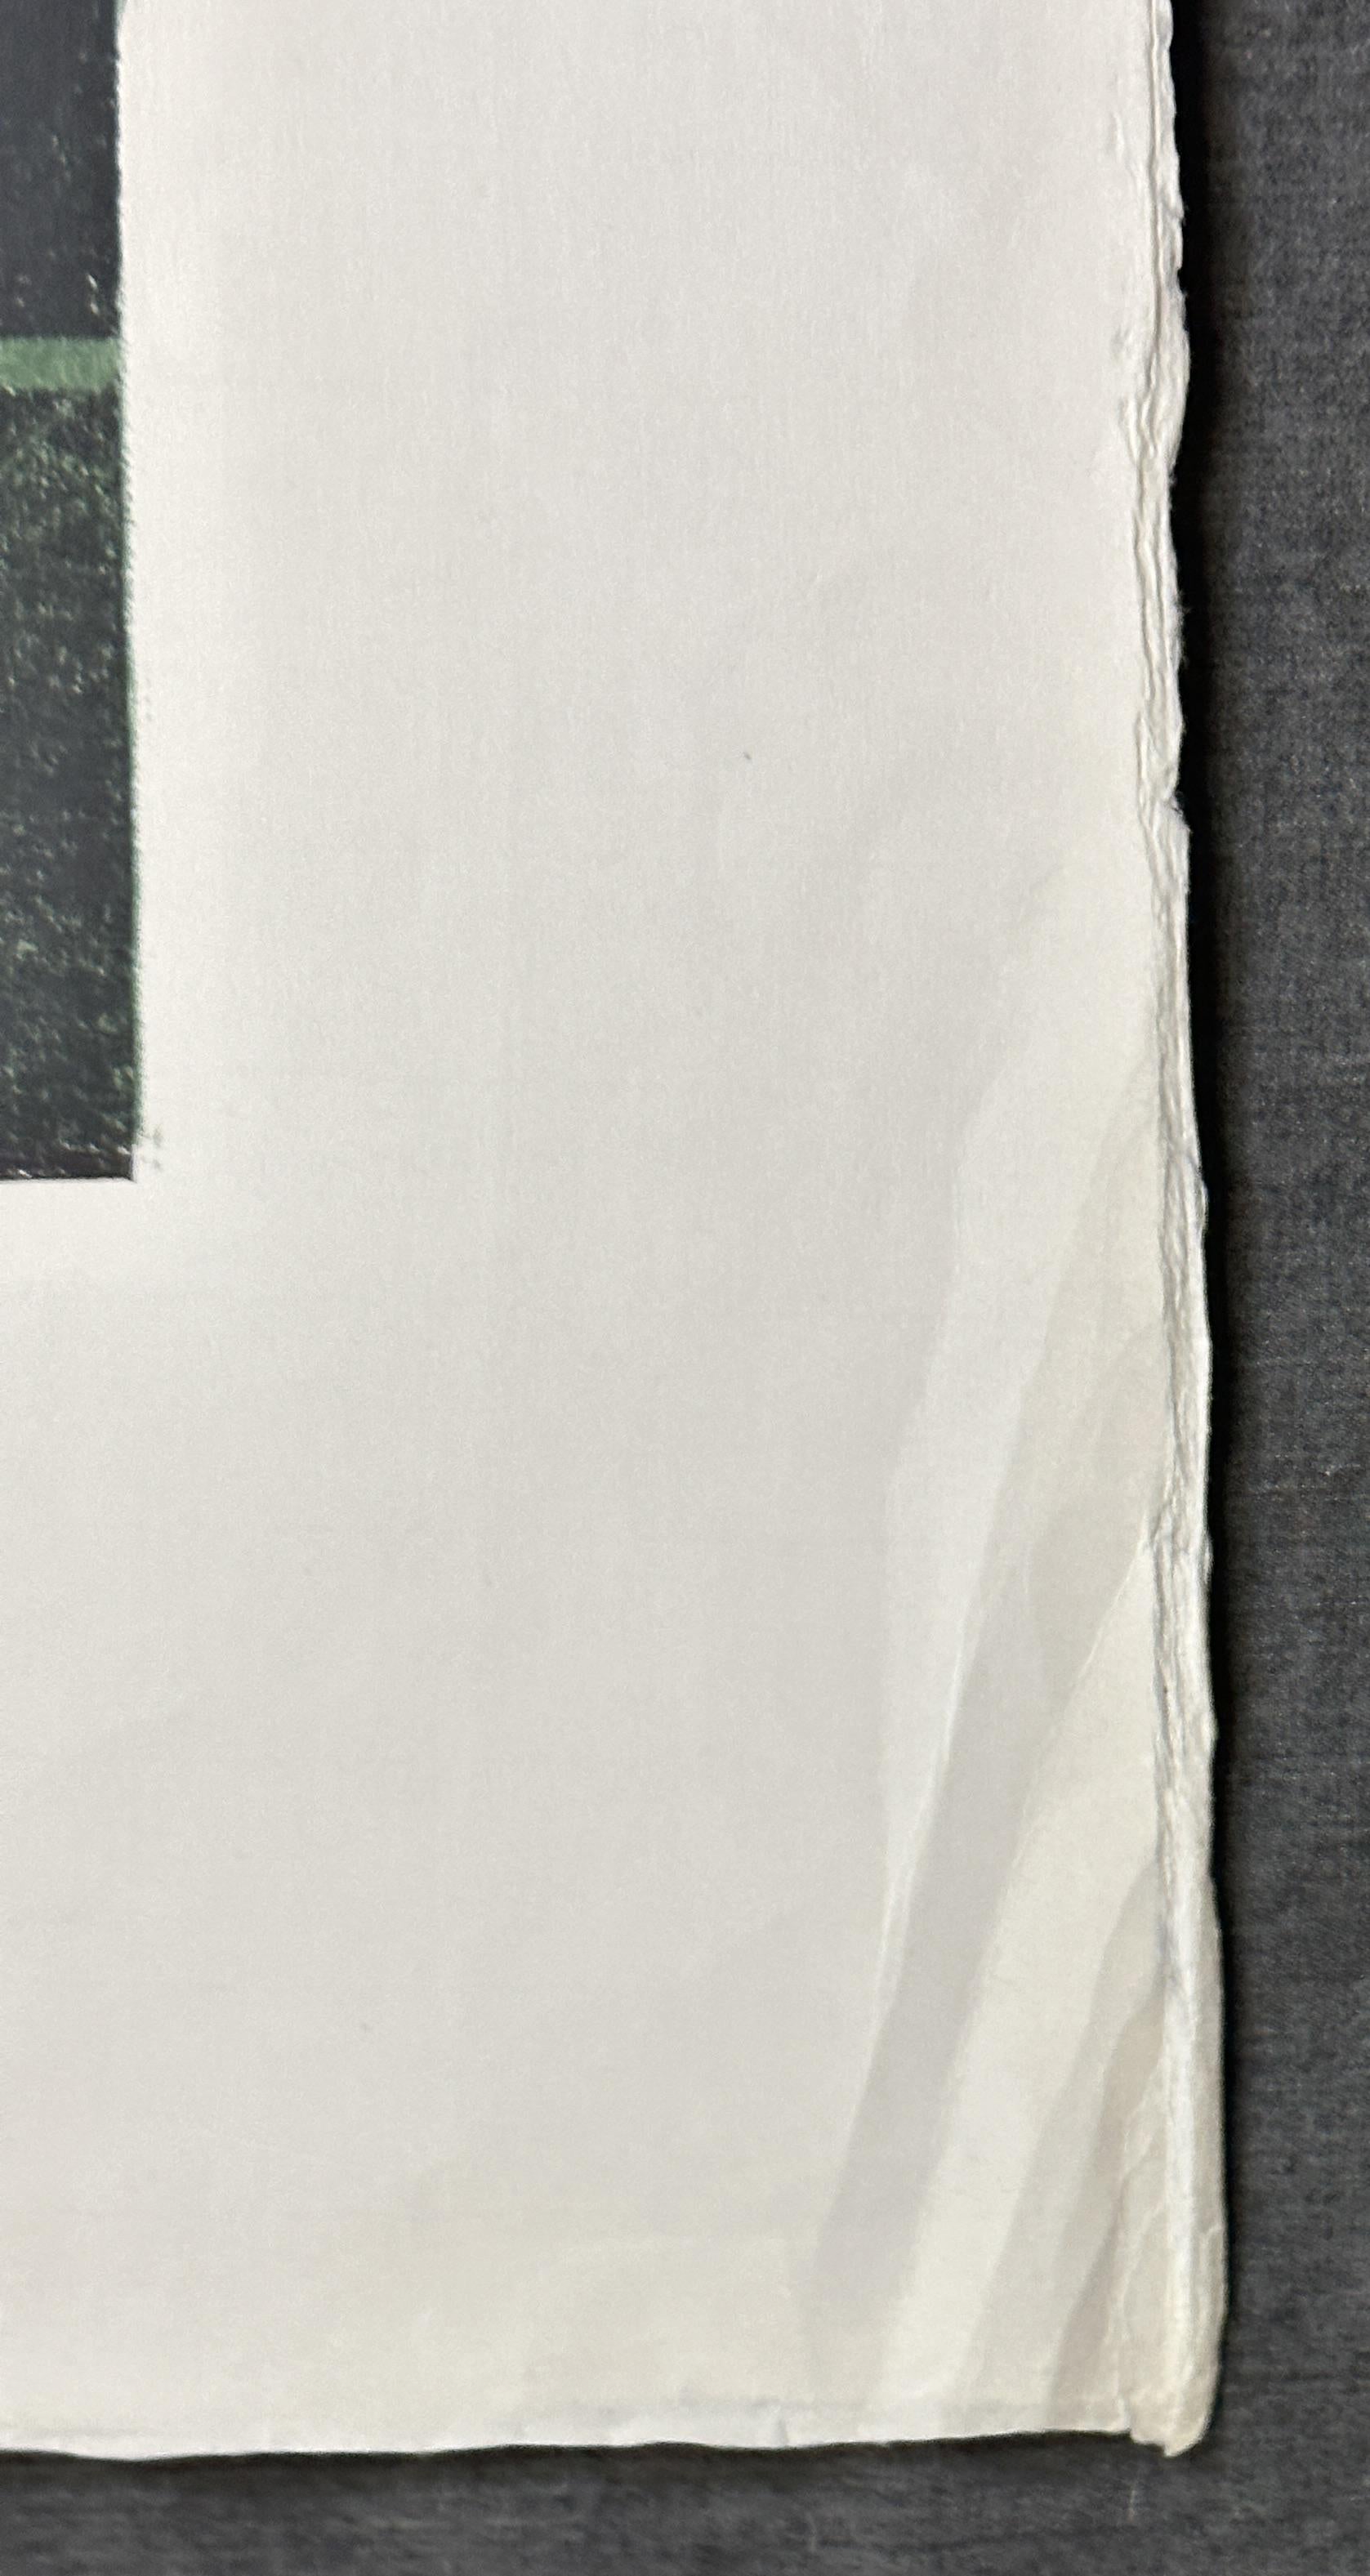 Peter Green
Midnight Flower 
Paper Size = 26½